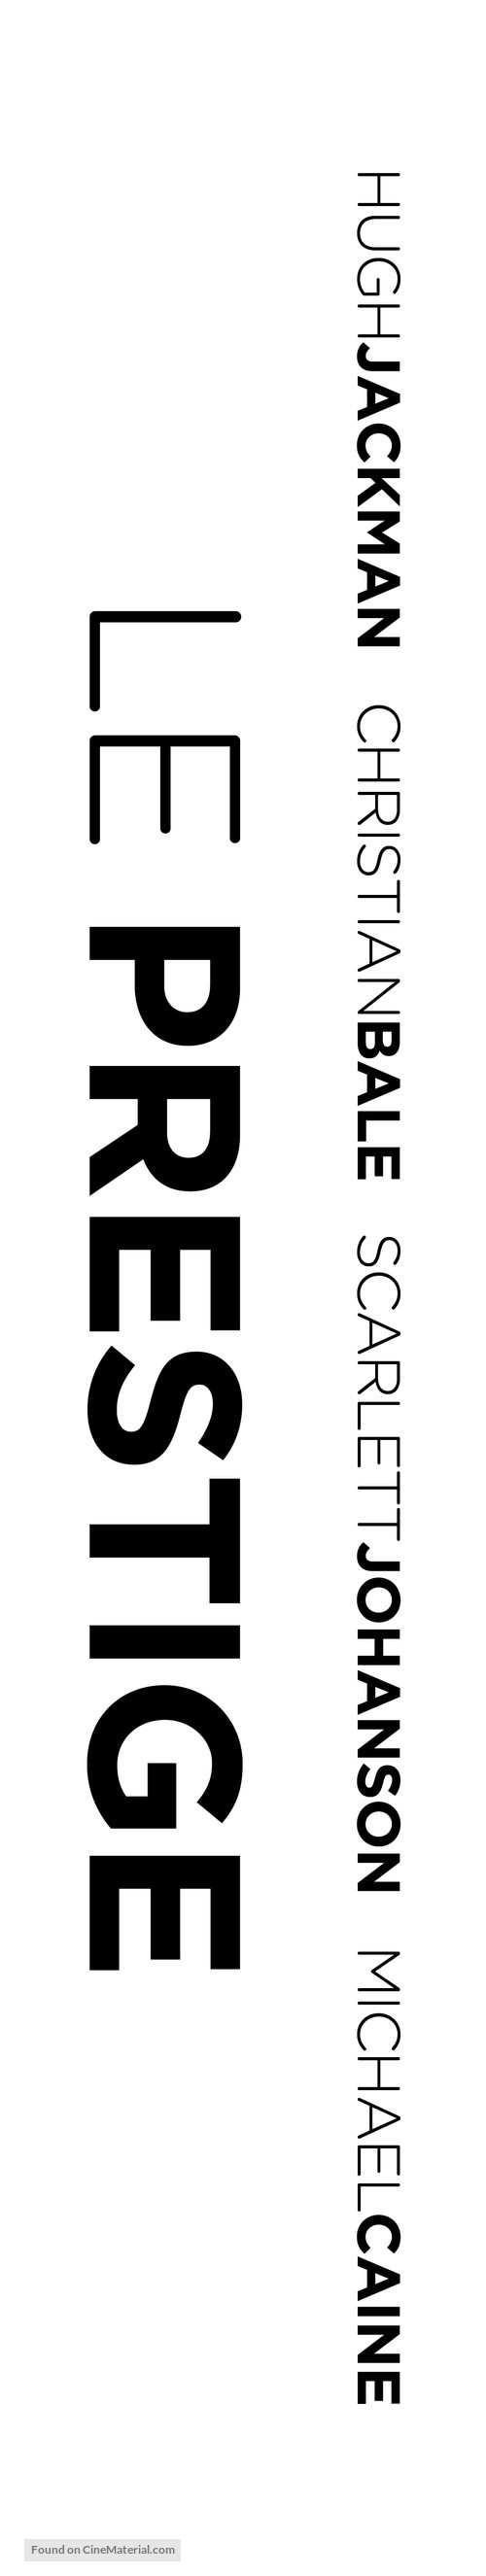 The Prestige - French Logo